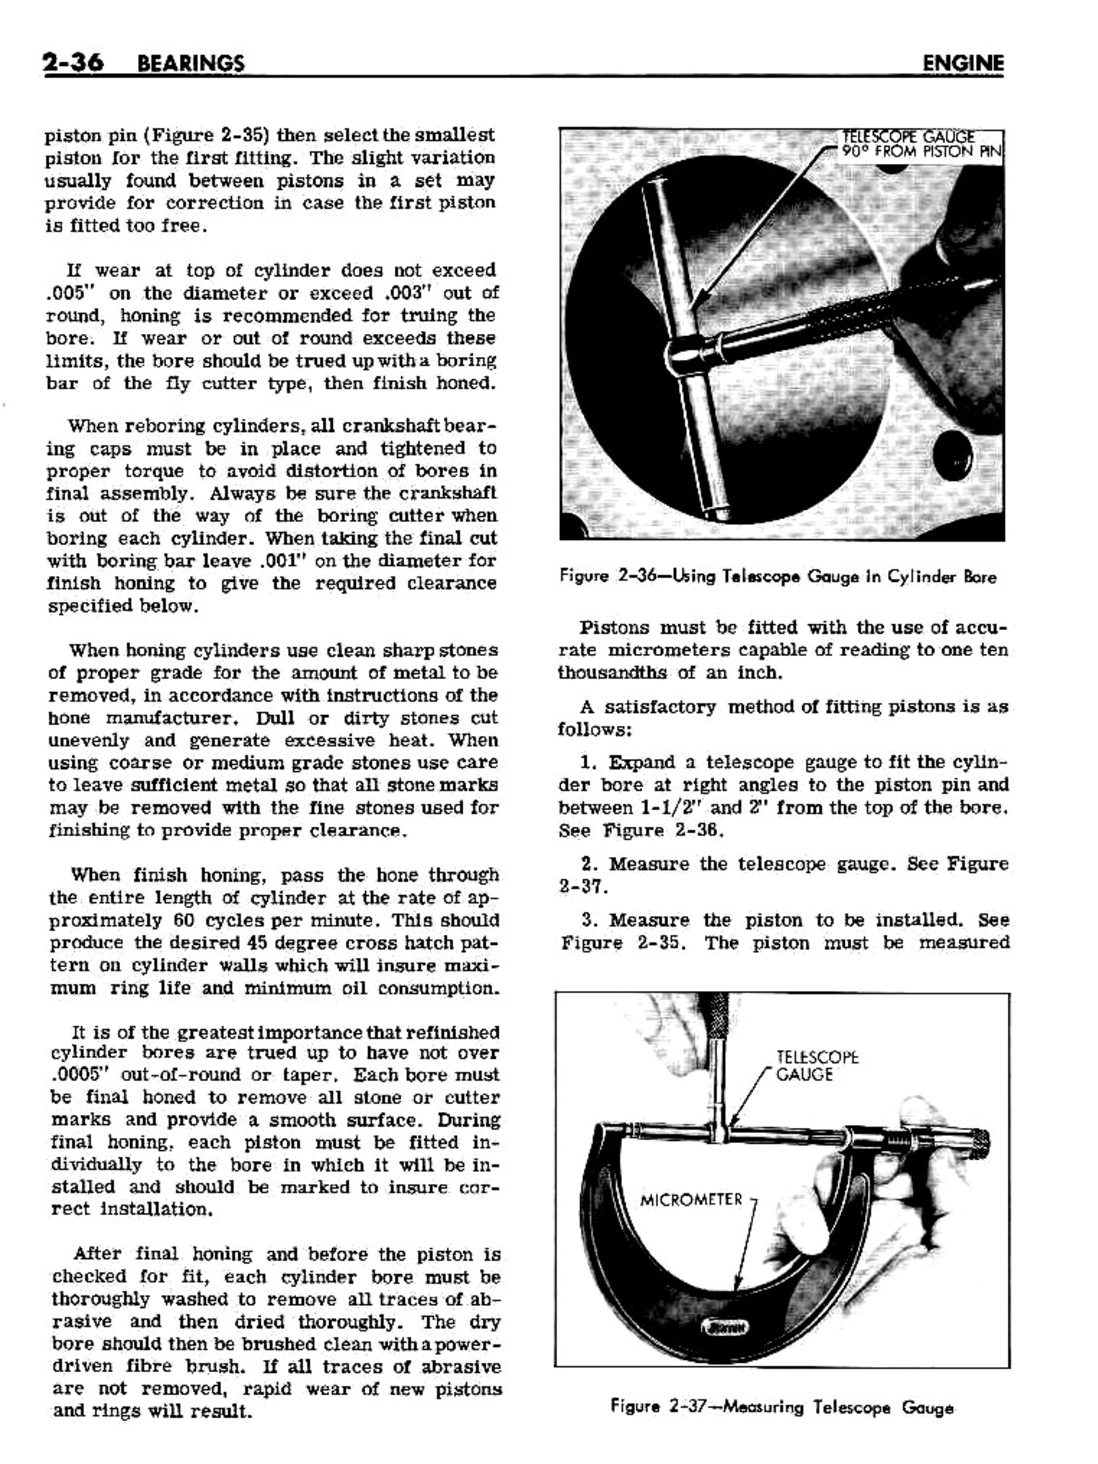 n_03 1961 Buick Shop Manual - Engine-036-036.jpg